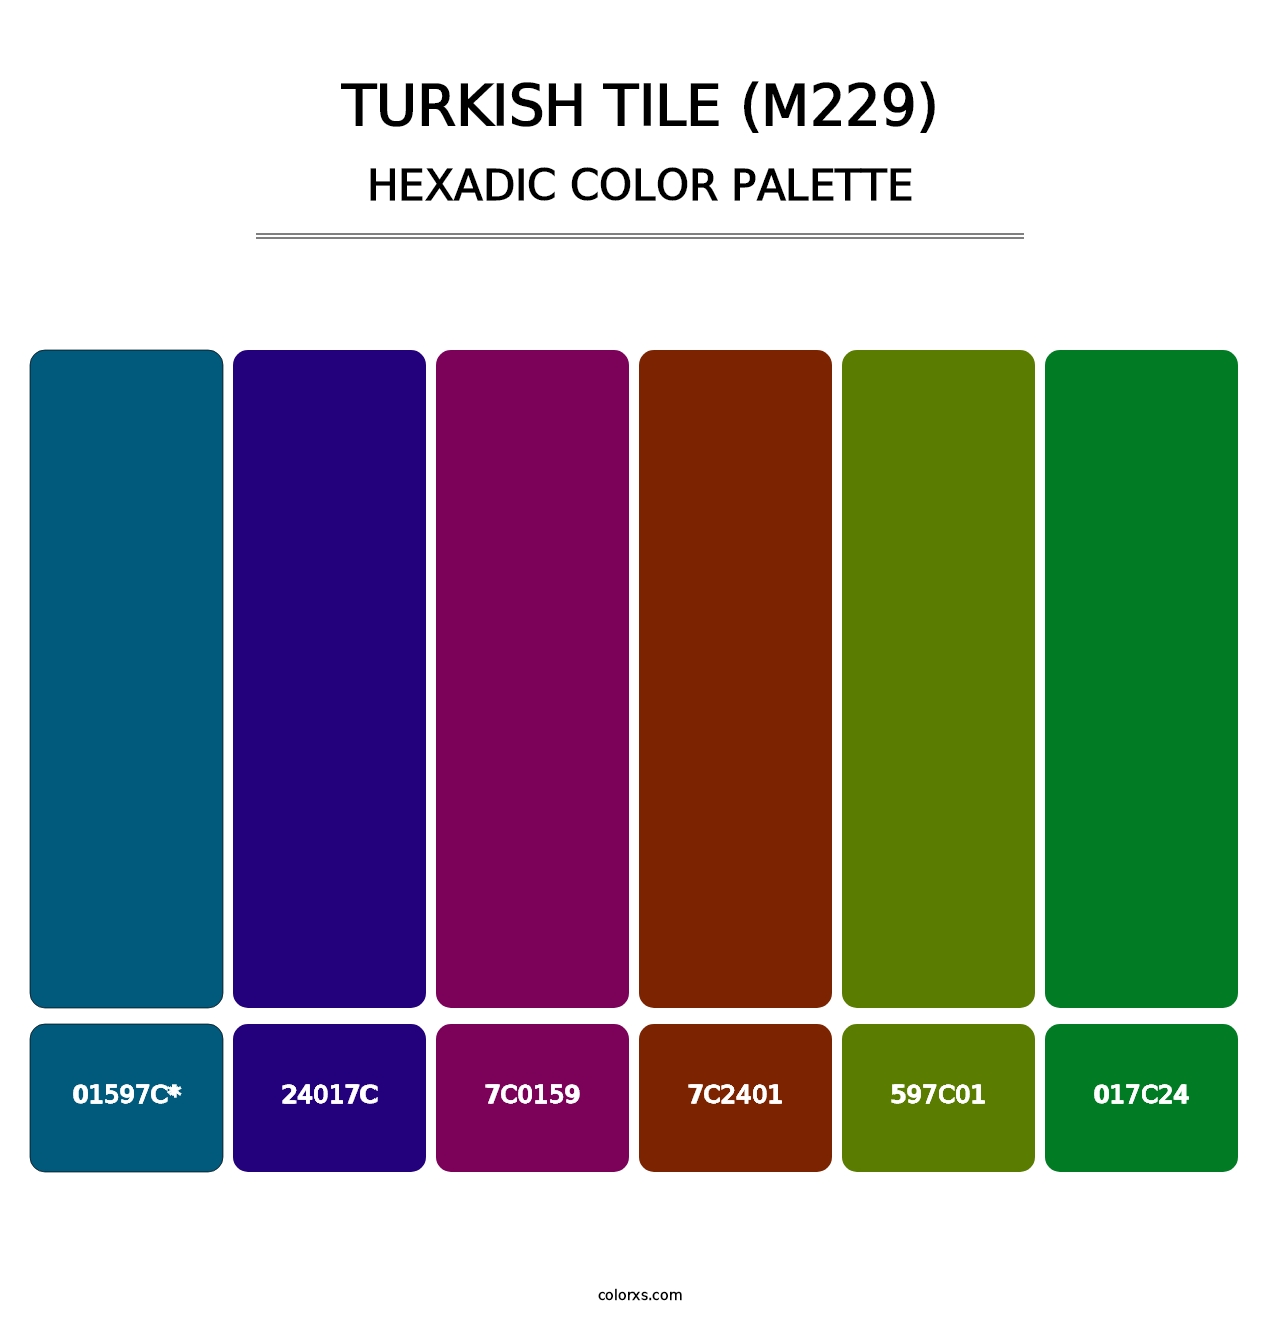 Turkish Tile (M229) - Hexadic Color Palette